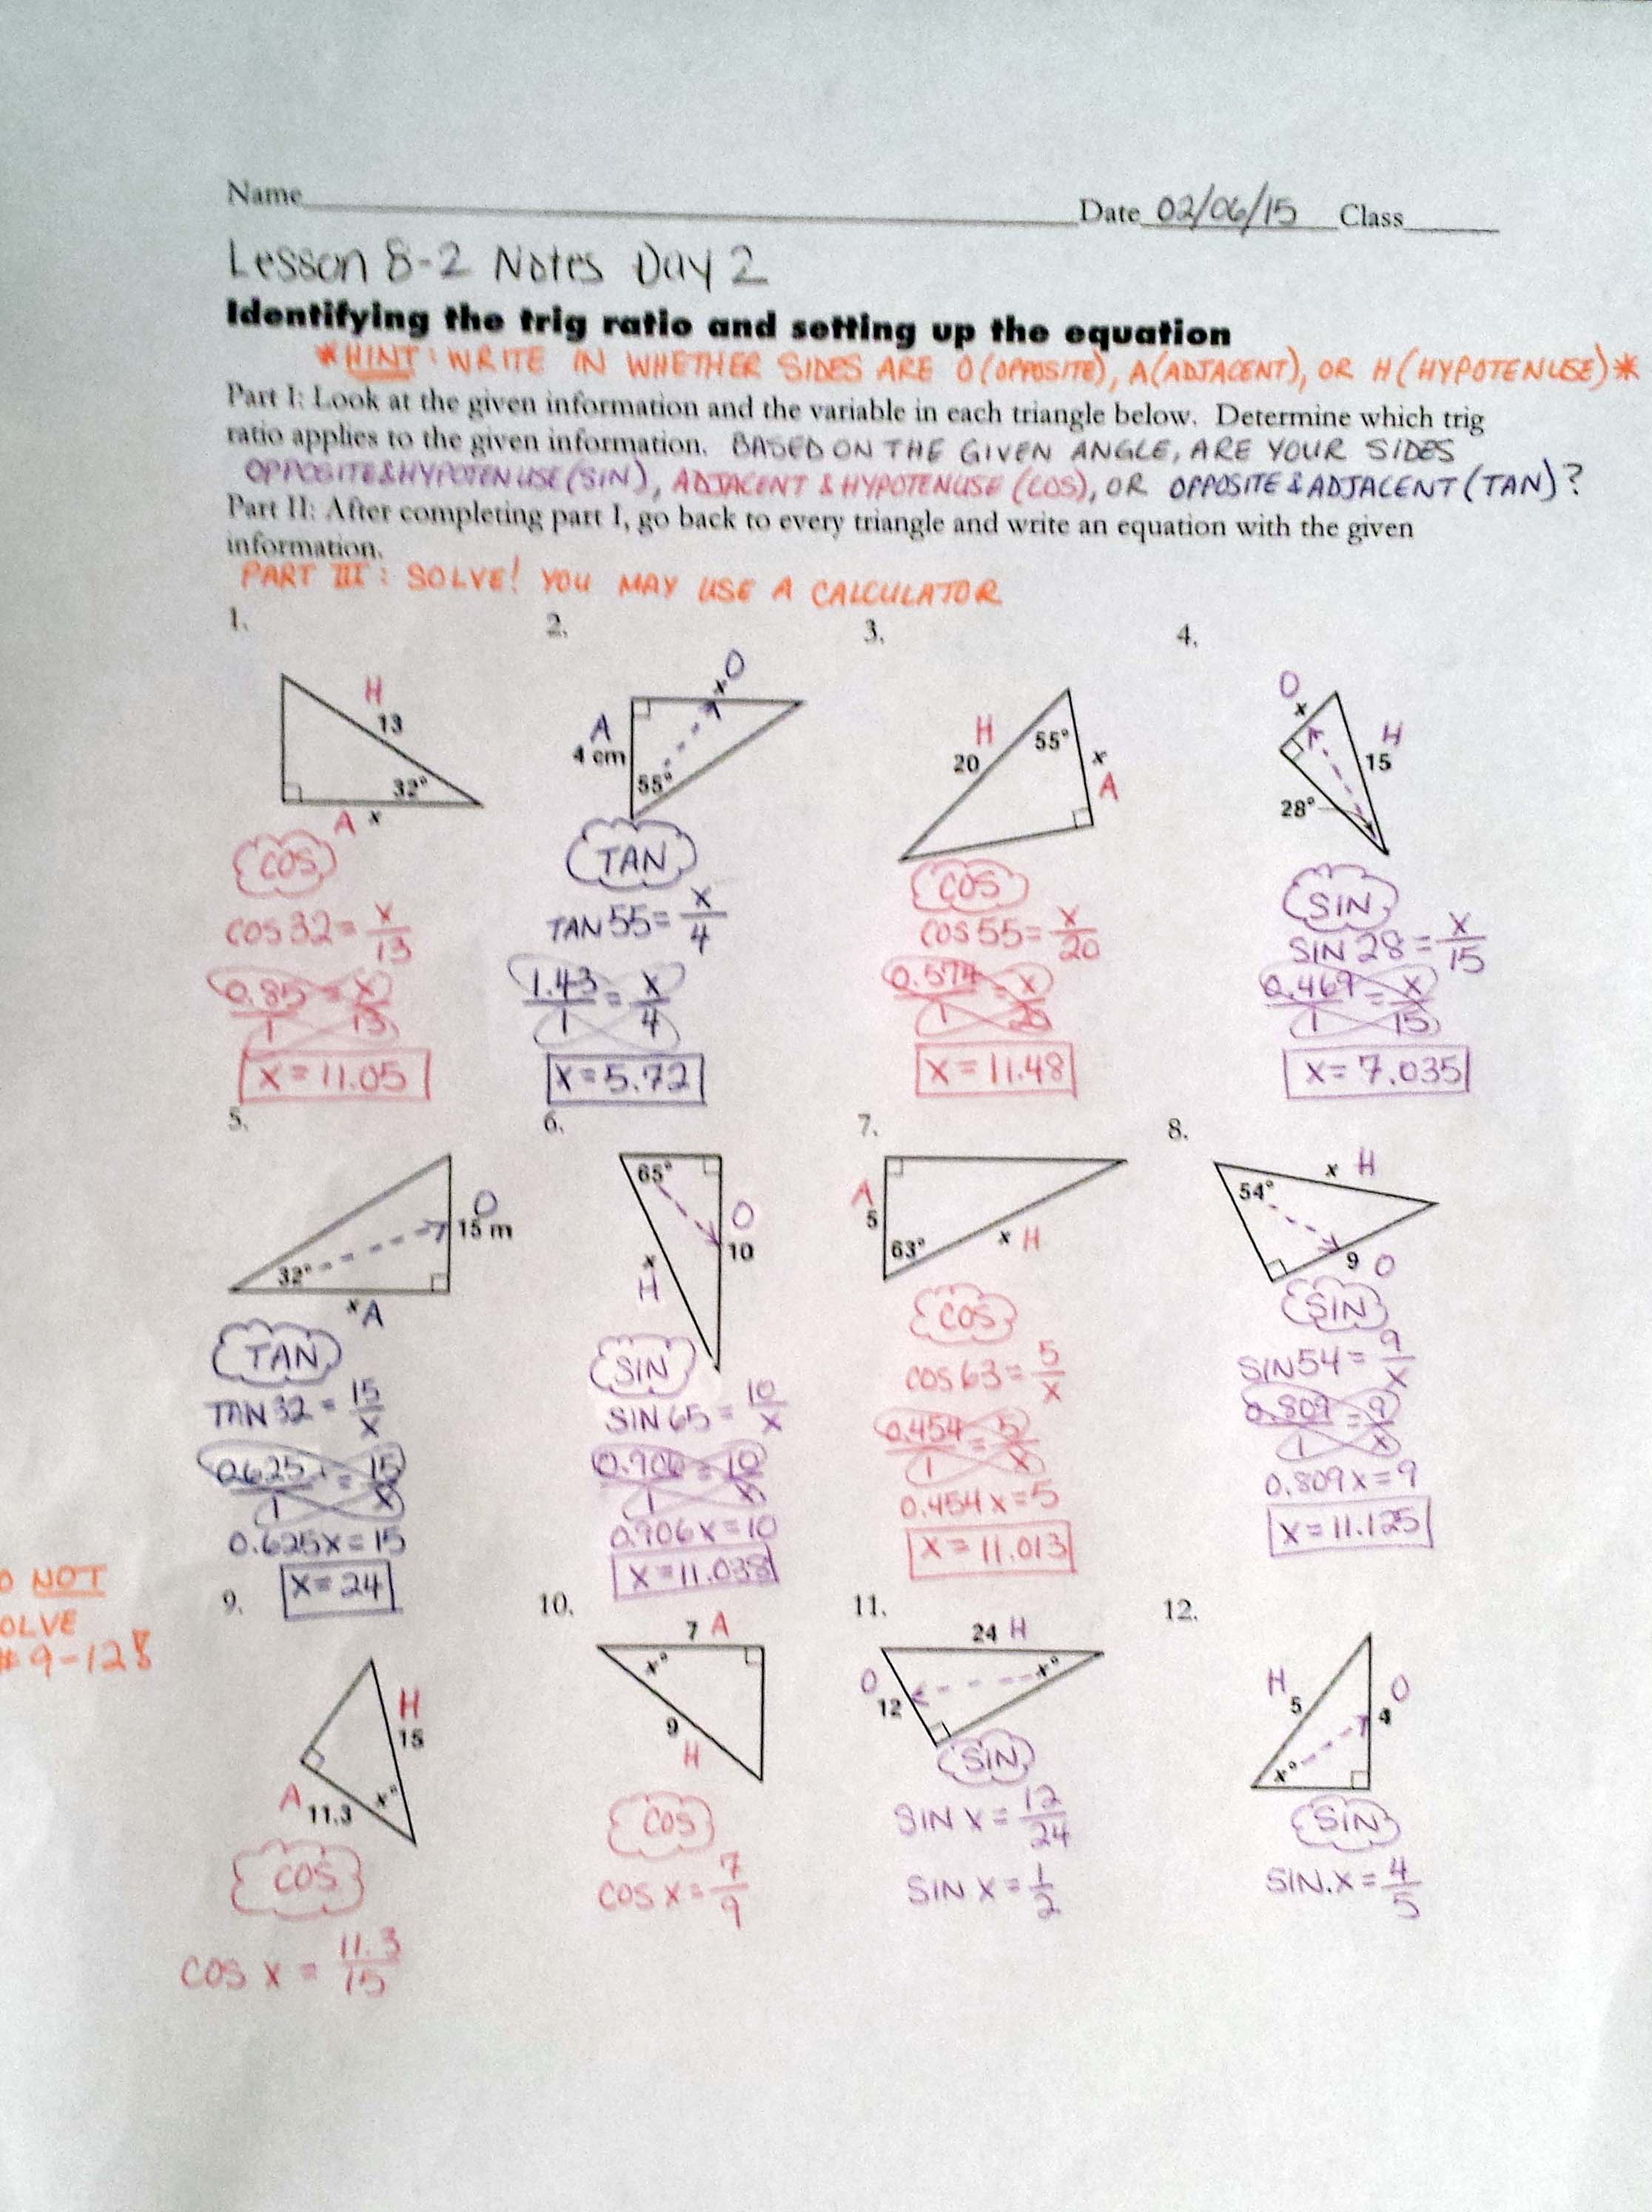 Punchline Algebra Book A 7.6 Answers --